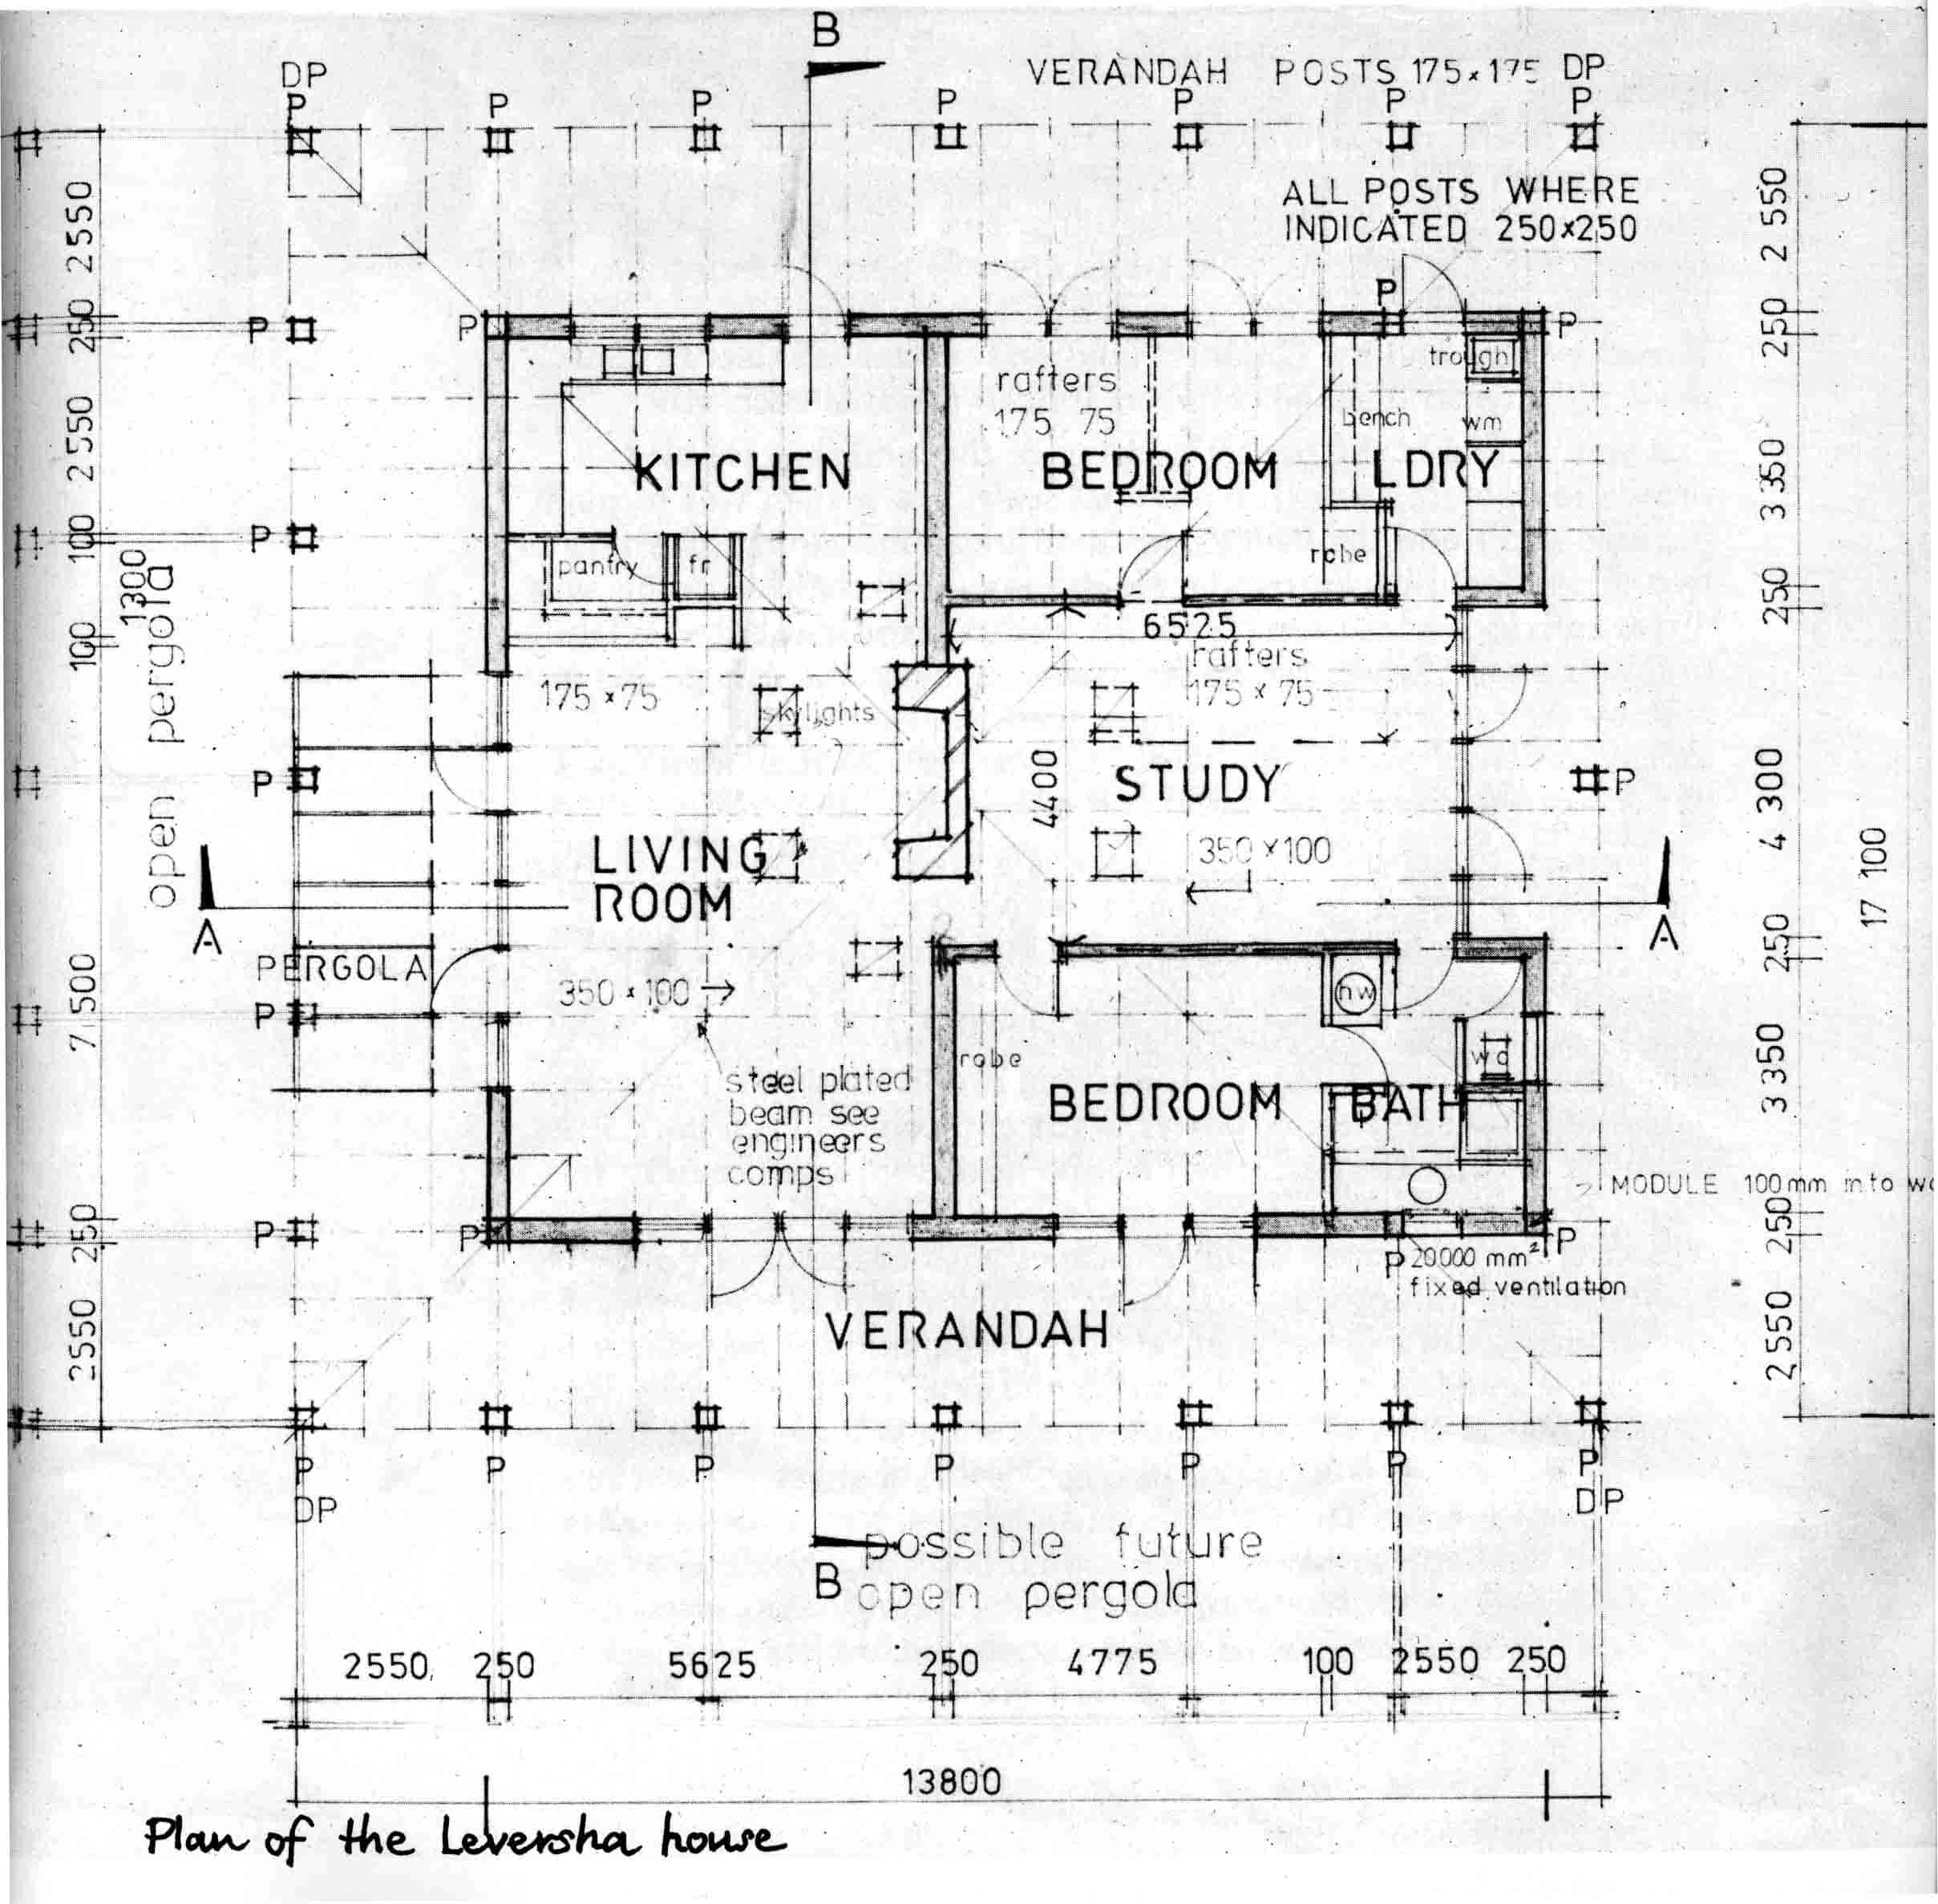 Plan of the Laversha house